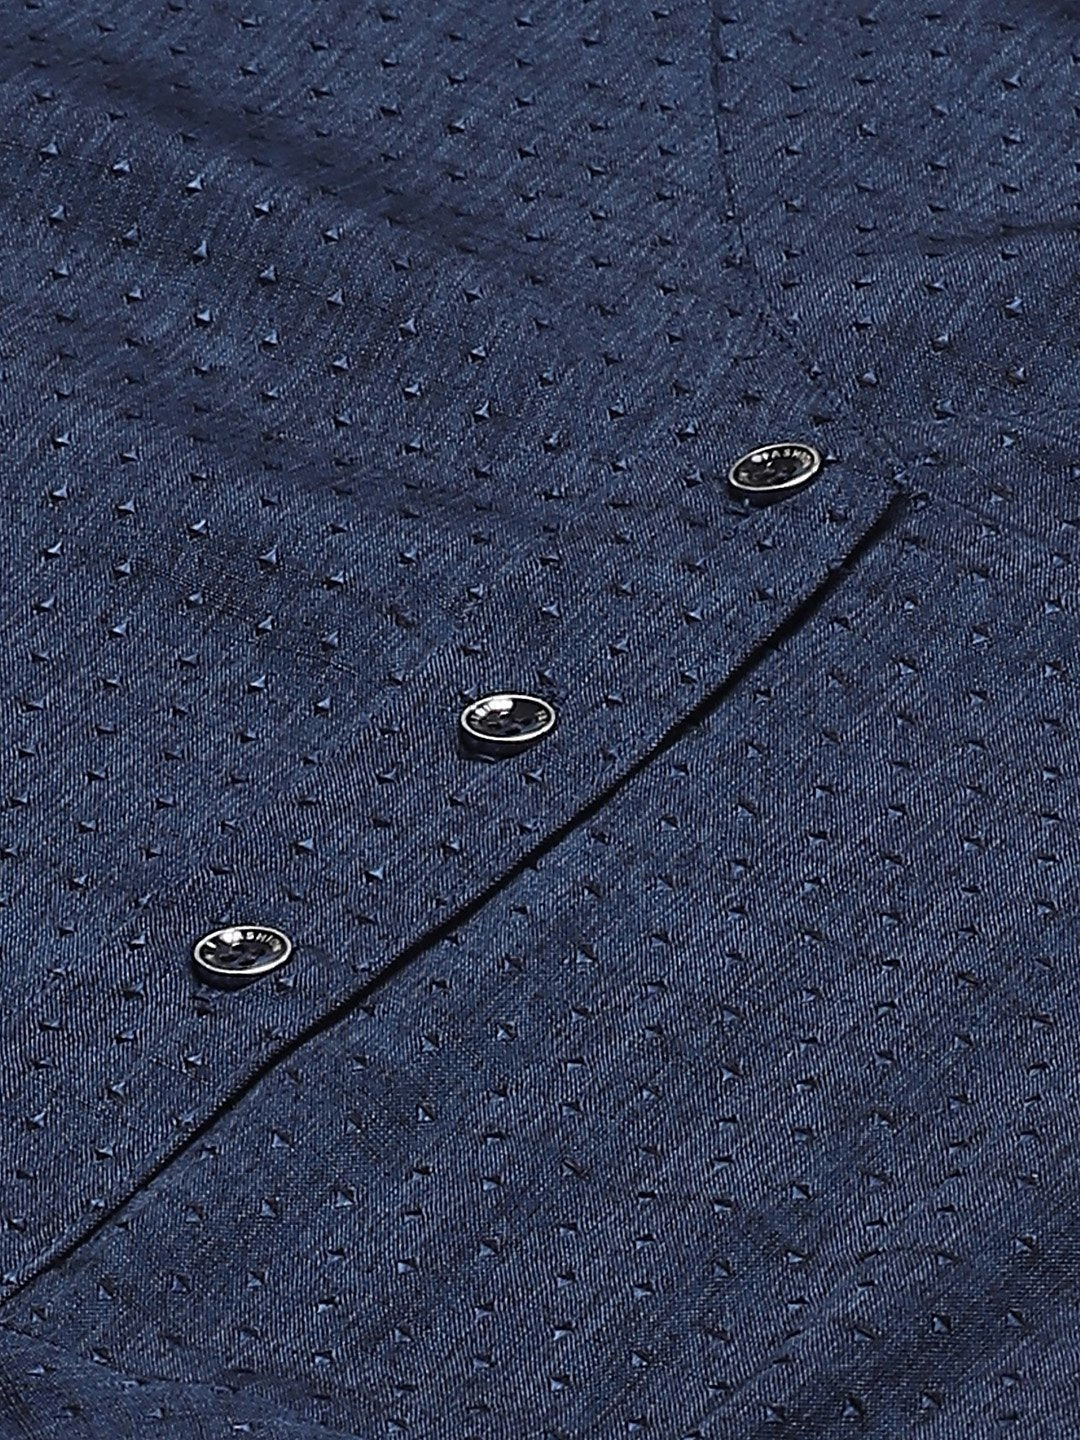 Women's Navy Blue & Charcoal Grey Self Design Kurta with Trousers & Dupatta - Jompers